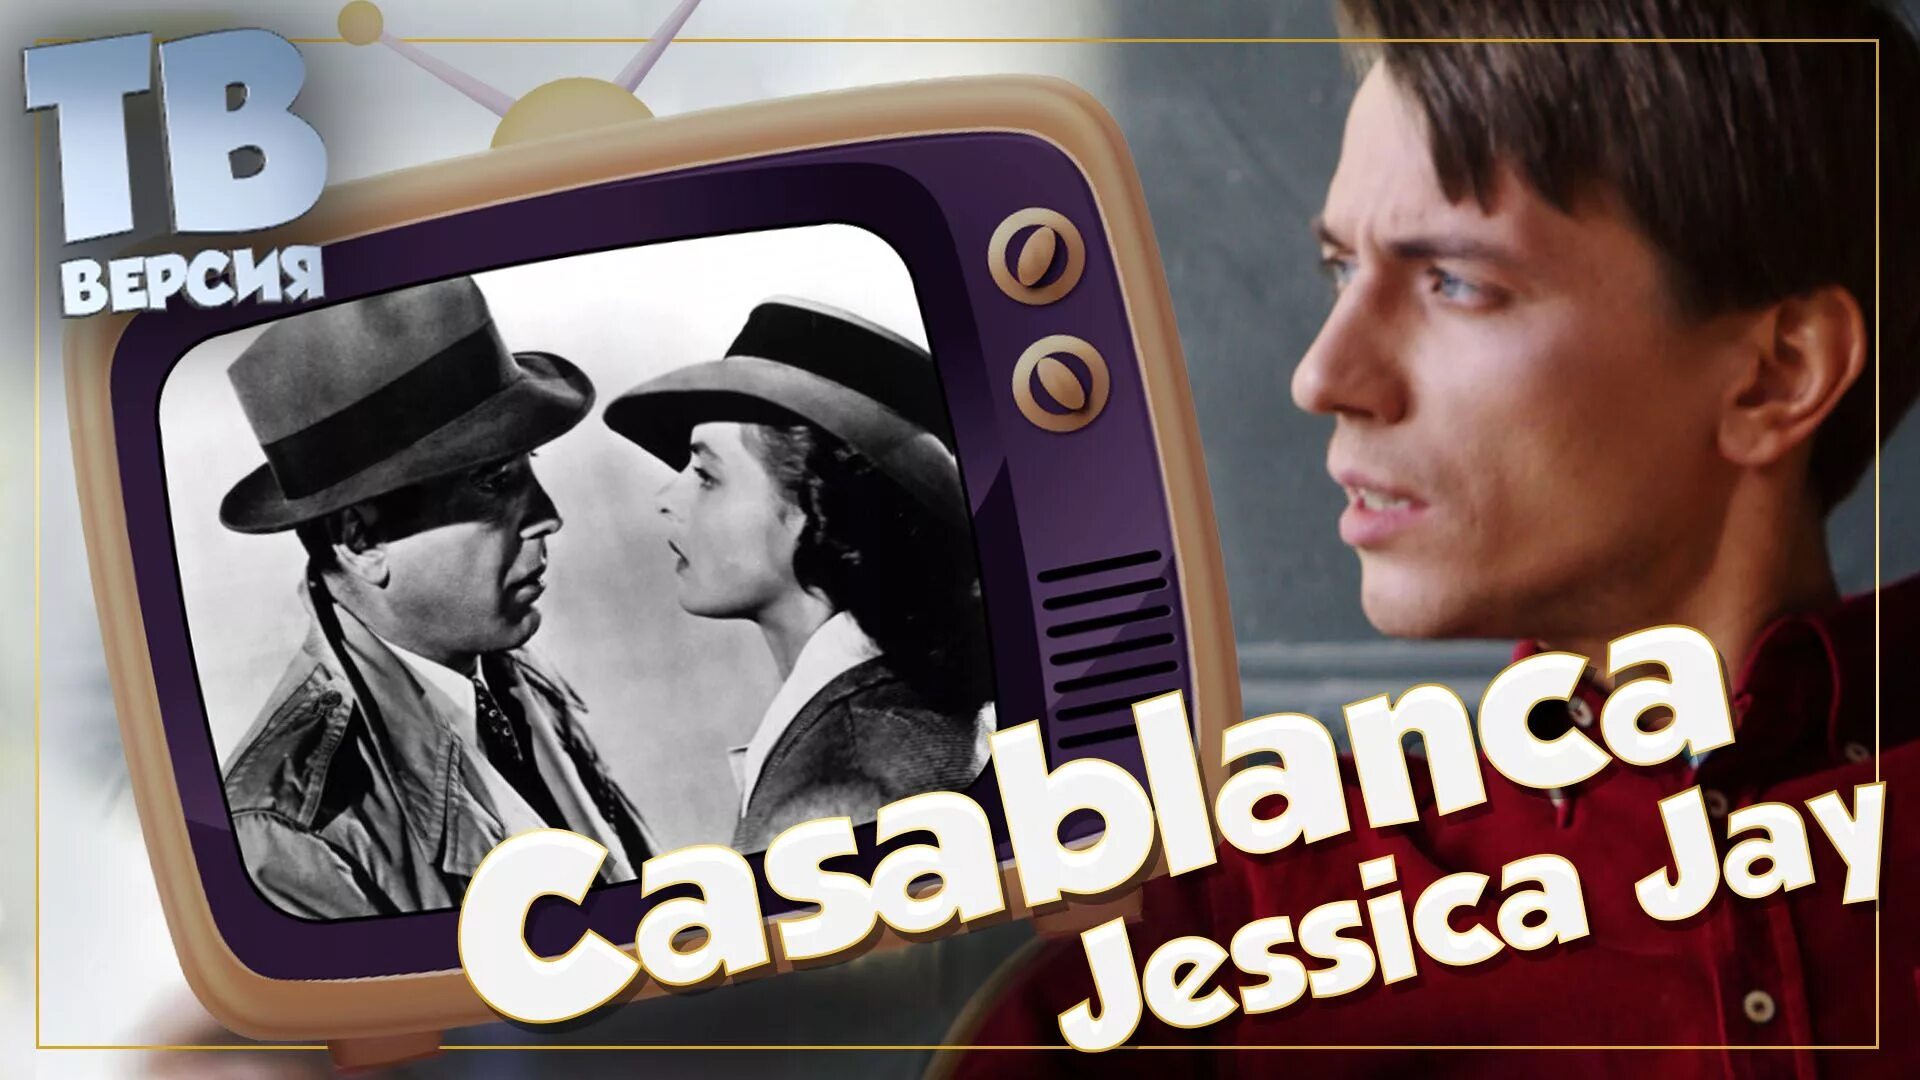 Jessica Jay Касабланка. Casablanca песня. Касабланка песня перевод